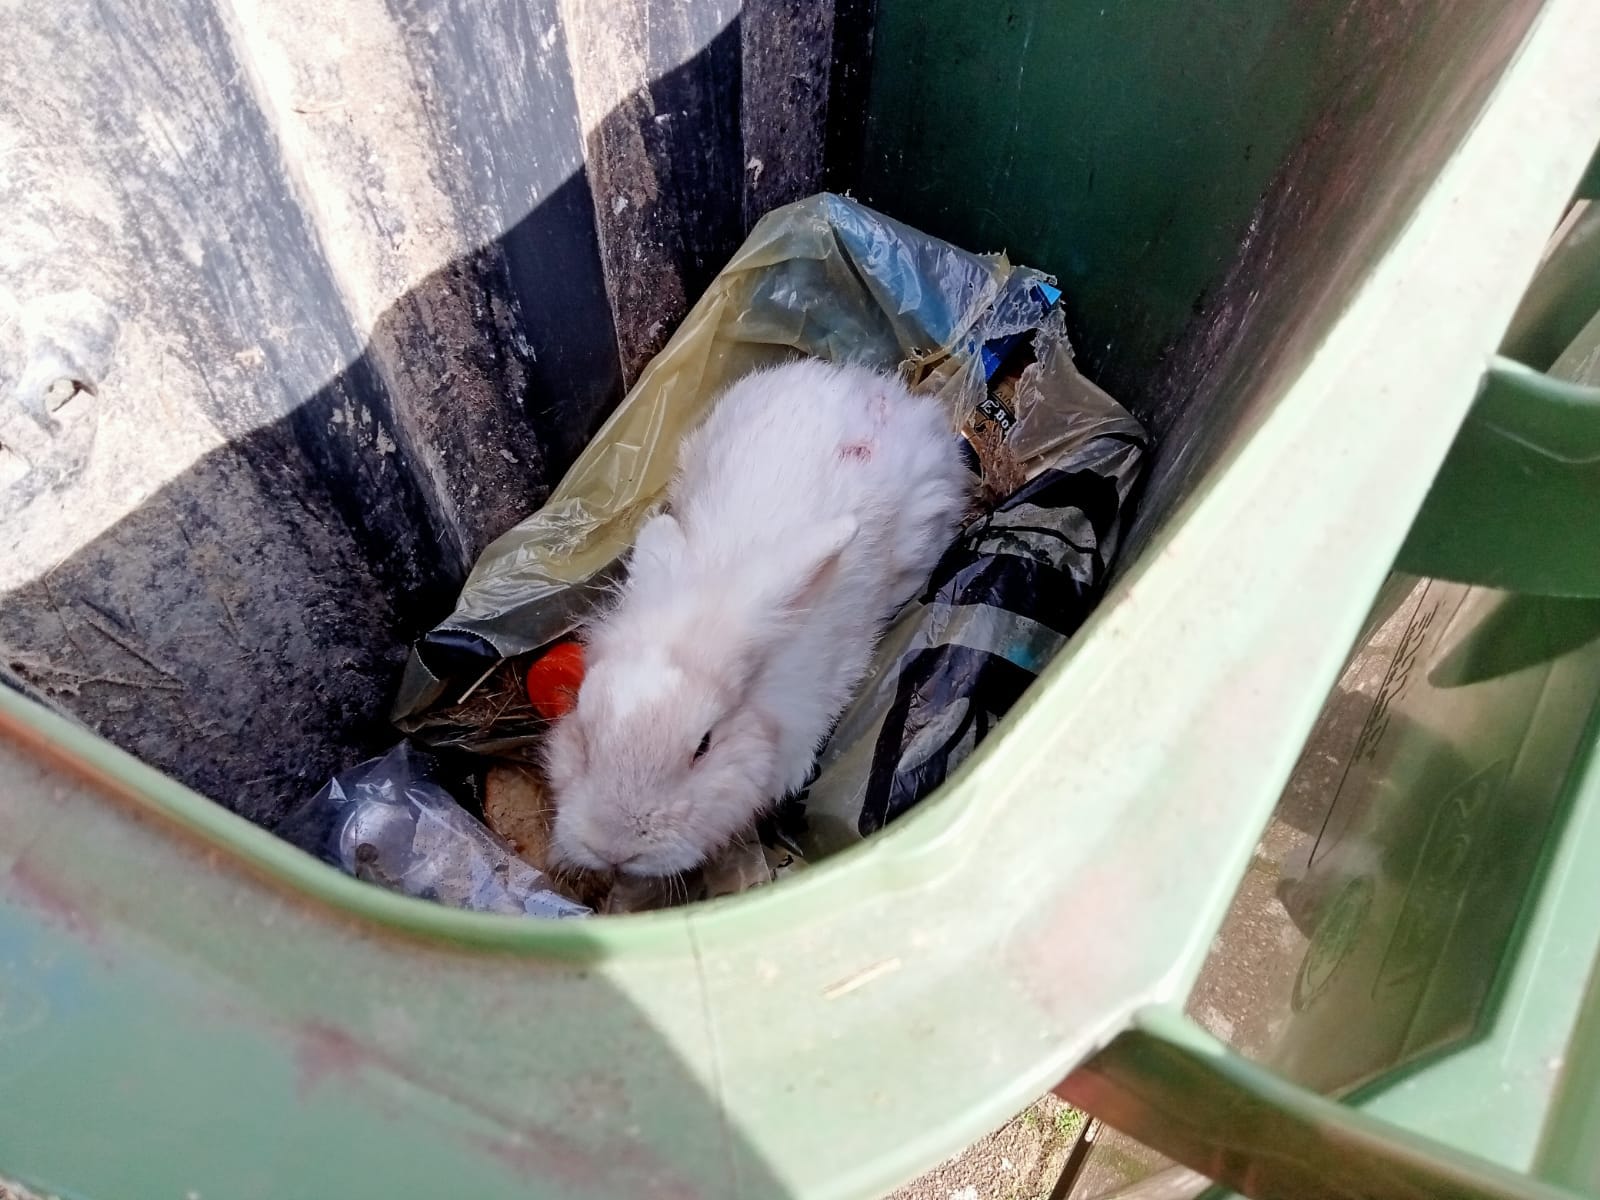 Vuilnismannen vinden gewond, mager konijn vol bijtwonden in vuilniscontainer Weert